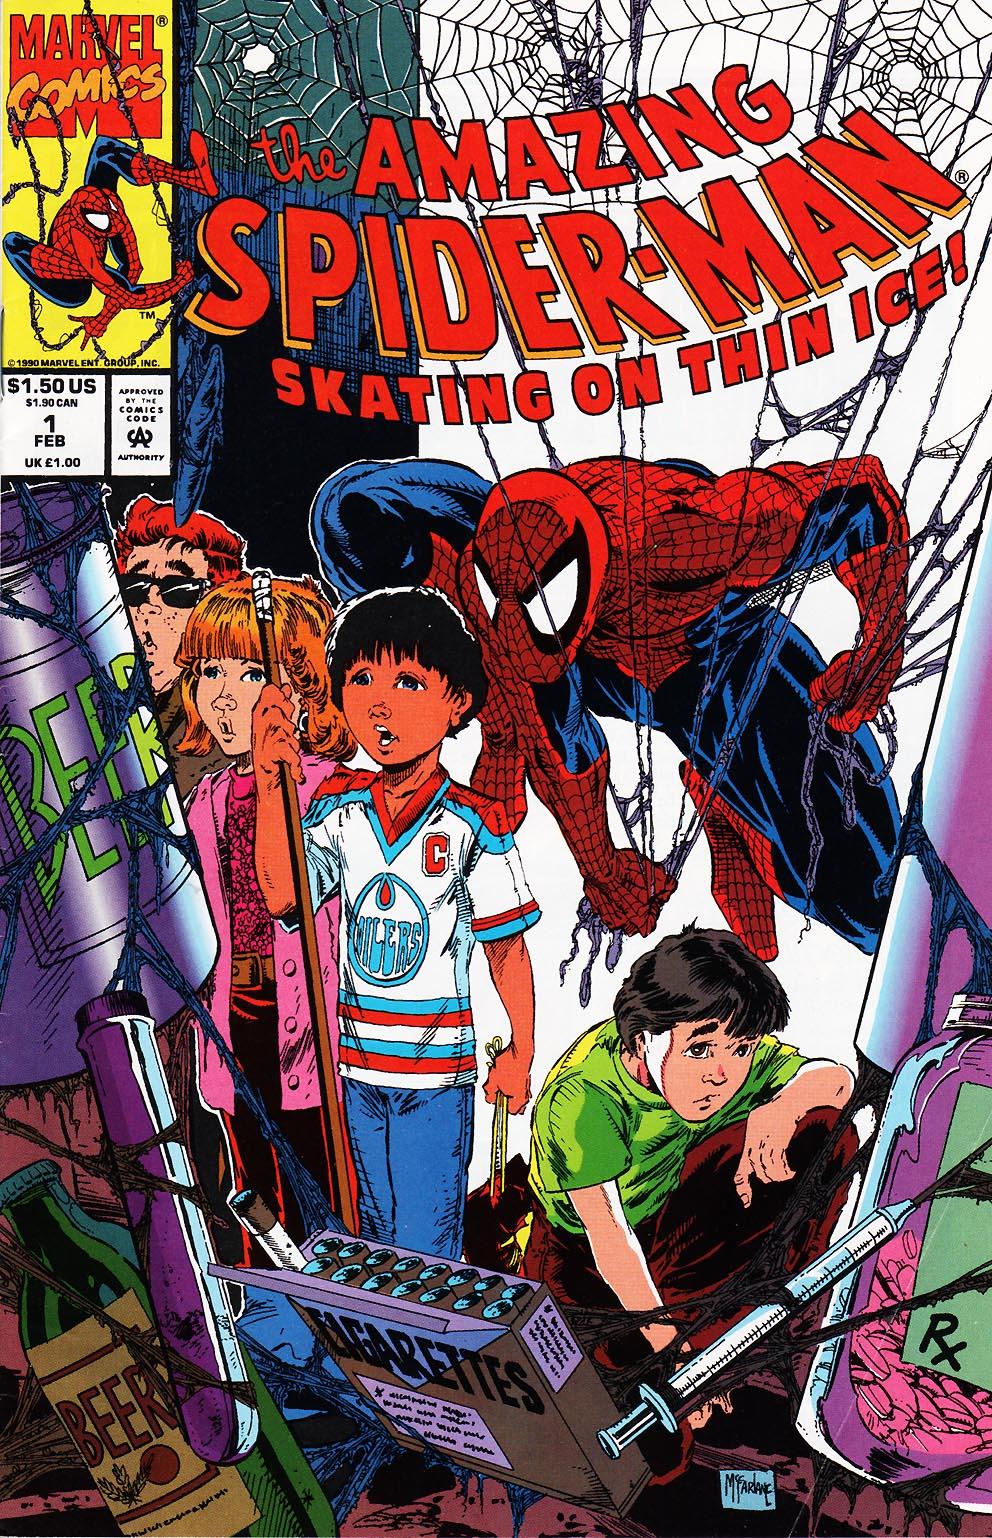 Amazing Spider-Man: Skating on Thin Ice Vol. 1 #1